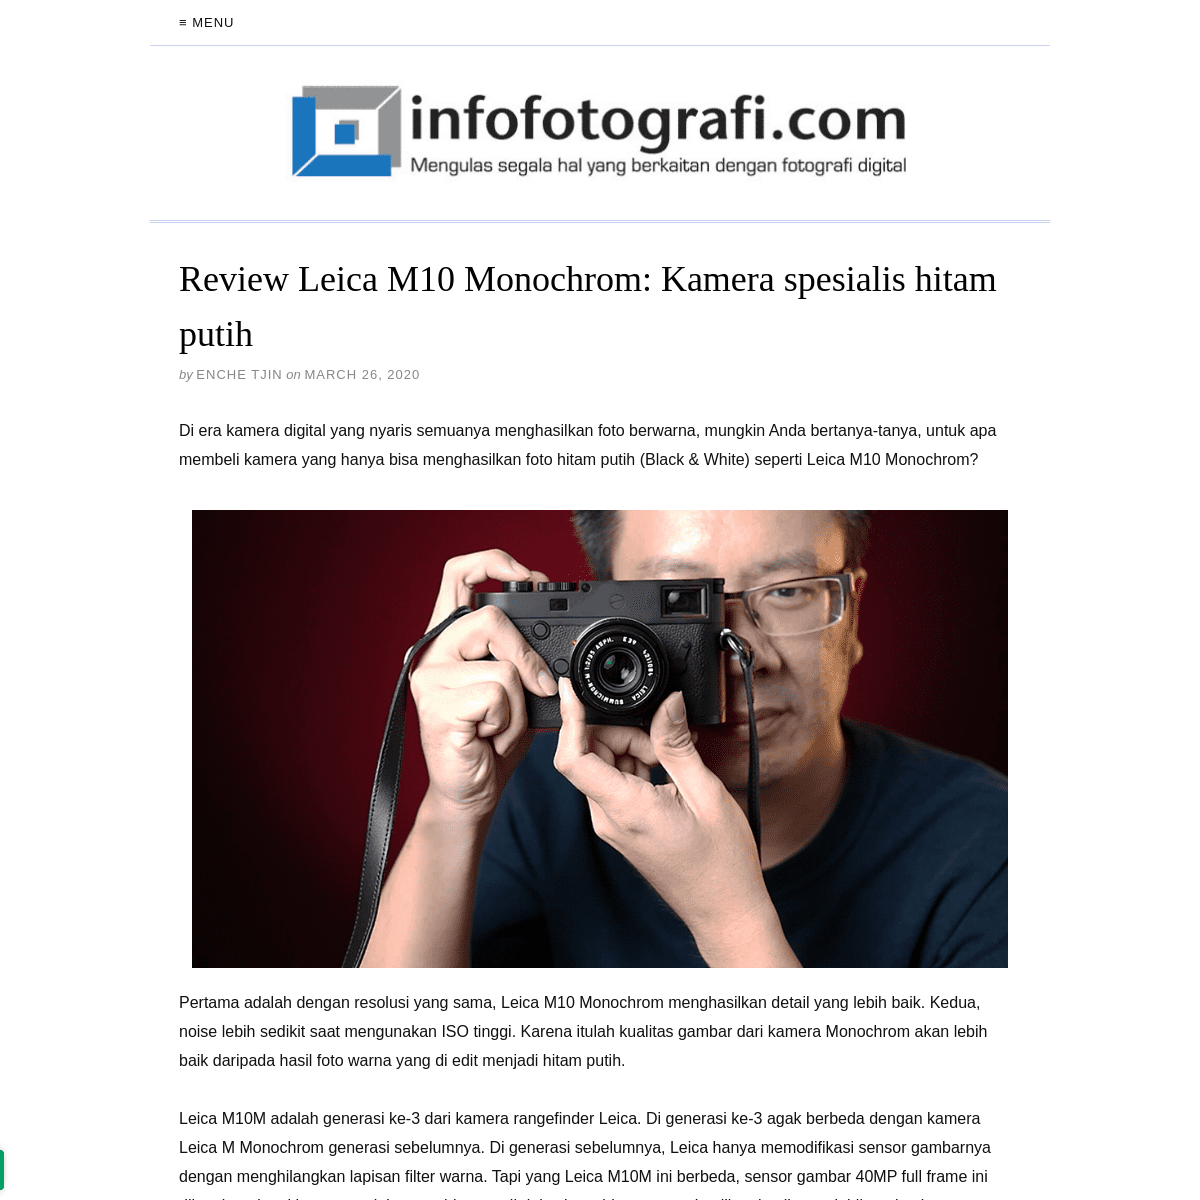 A complete backup of infofotografi.com